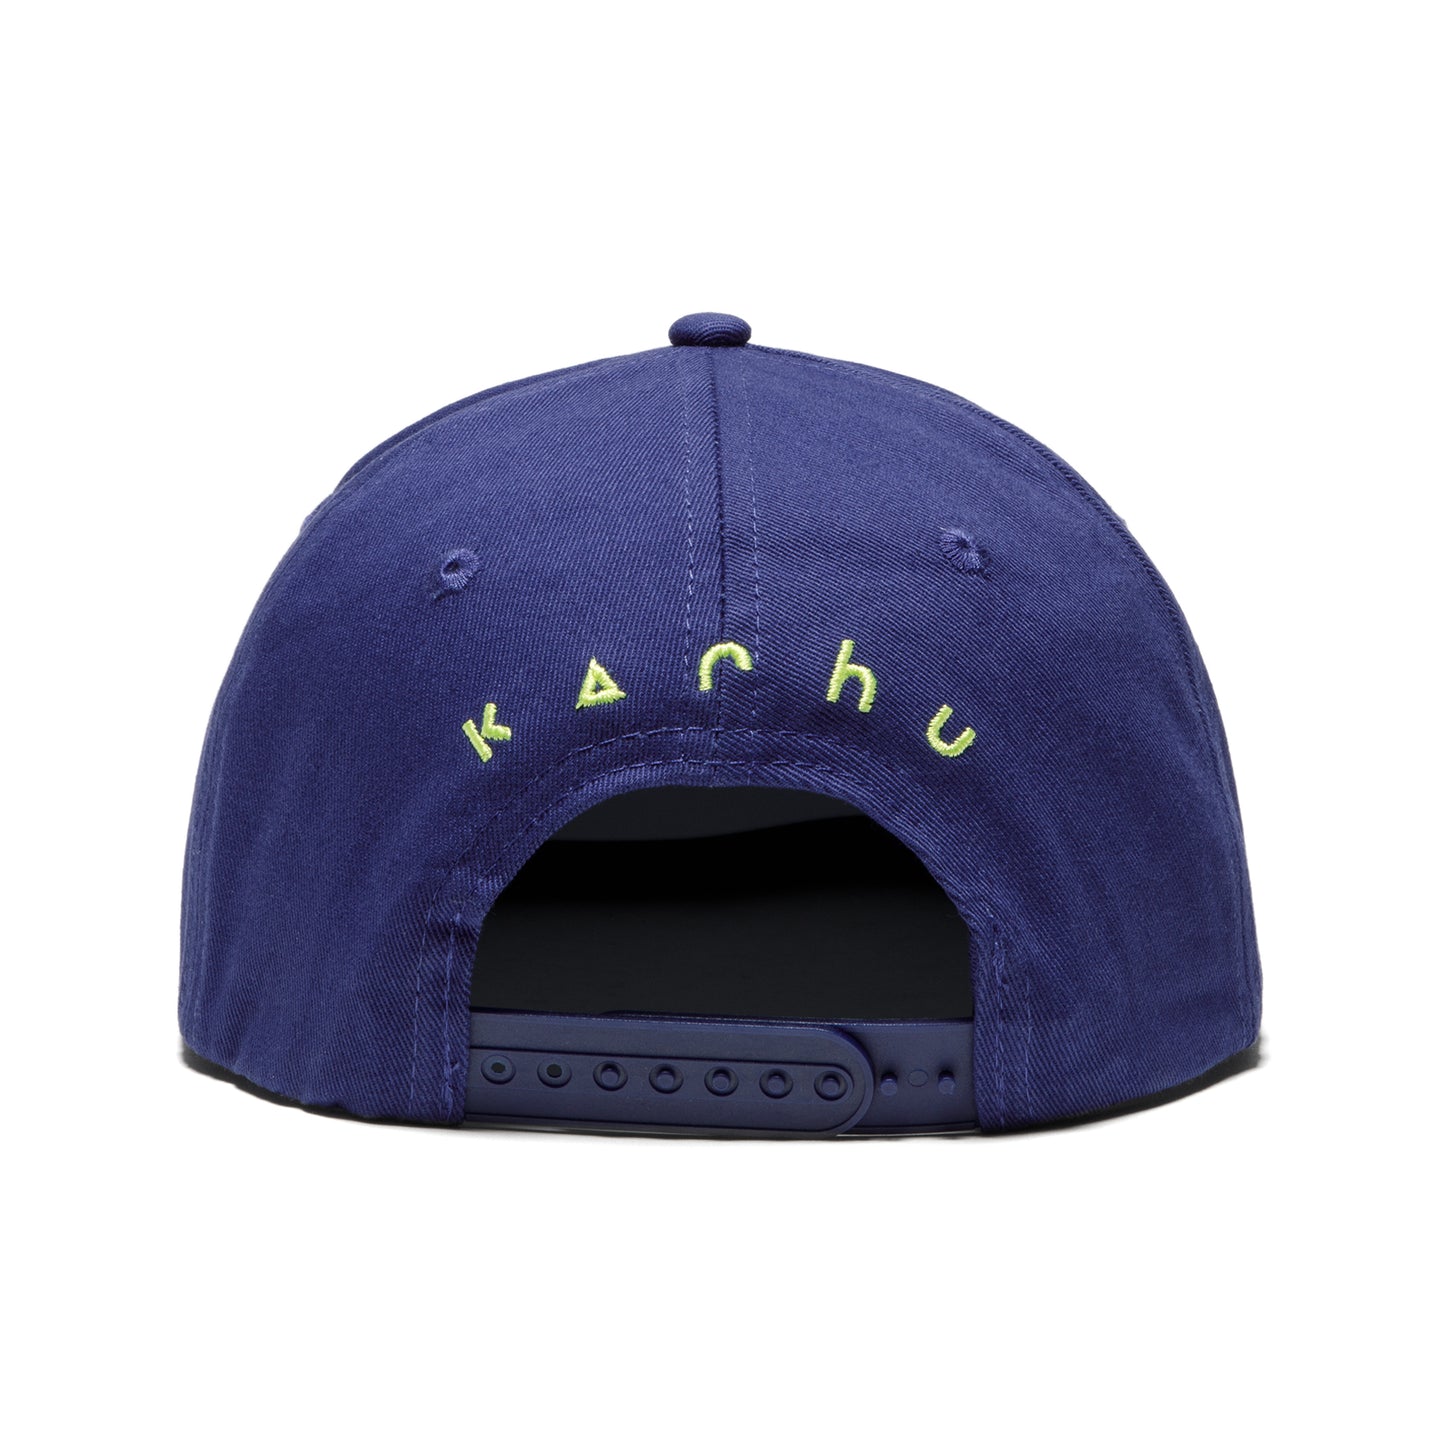 Karhu x Sasu Kauppi Morphing Karhu Cap (Blue Print/Flup Yellow)